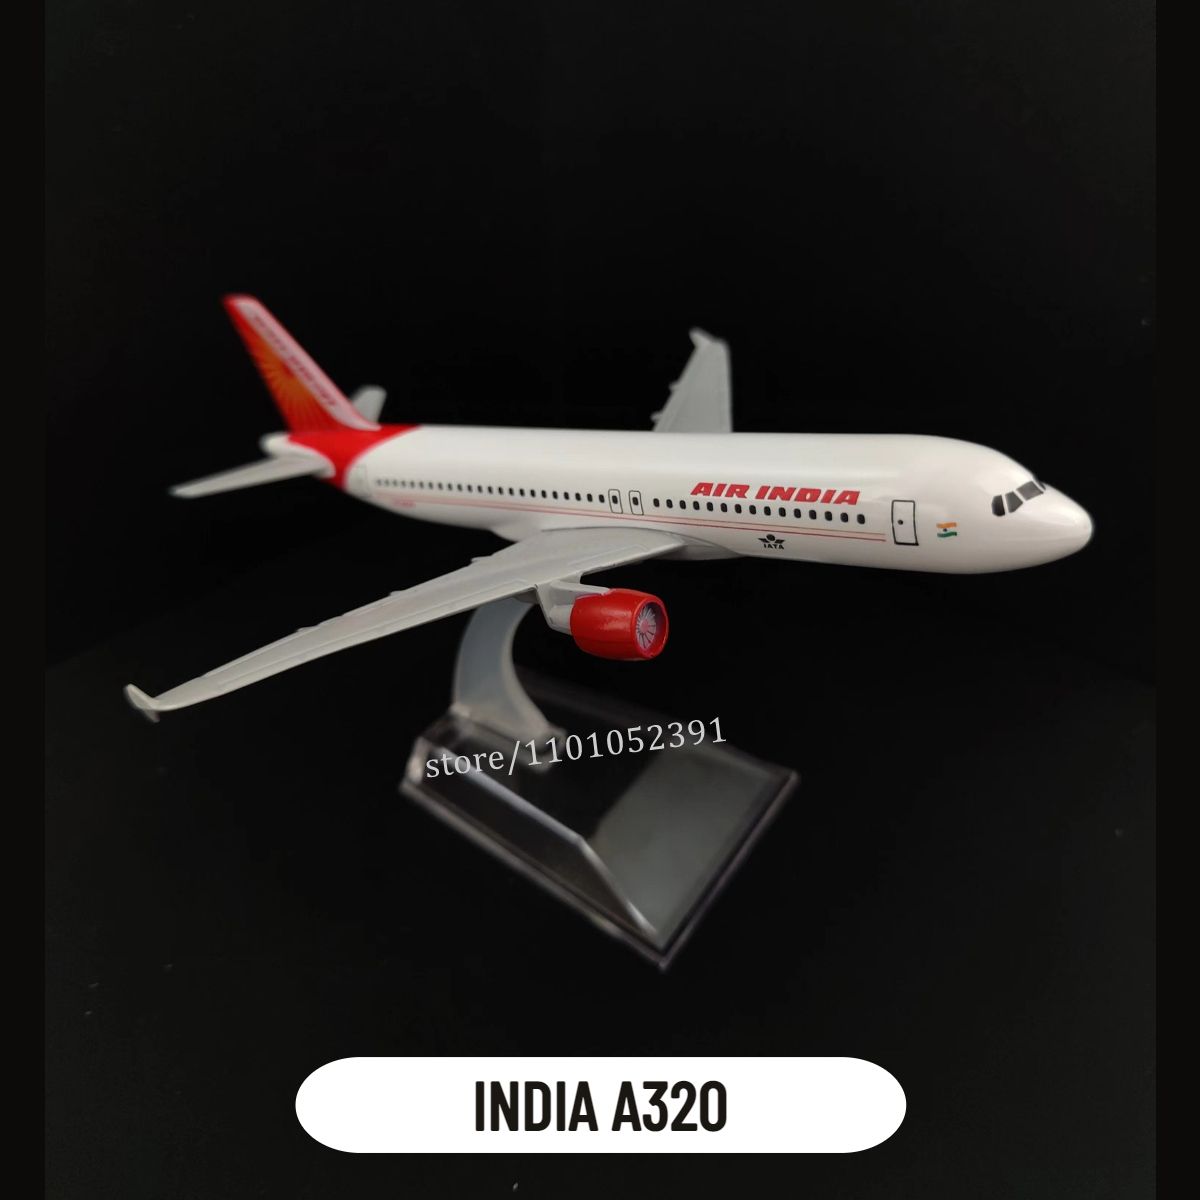 55. India A320